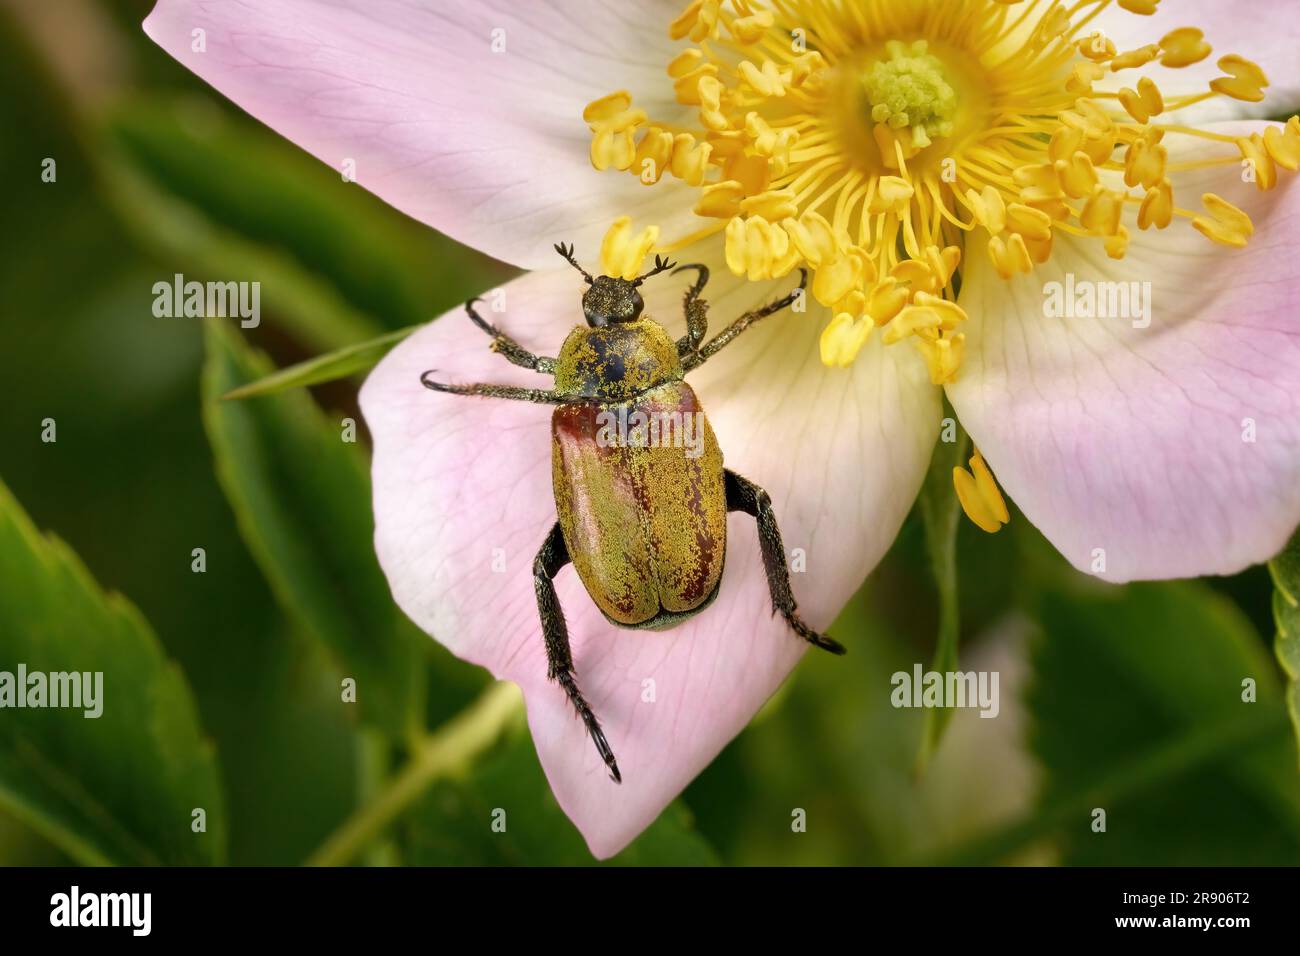 Hoplia argentea scarabeo sul fiore di una rosa canina (Rosa canina) Foto Stock